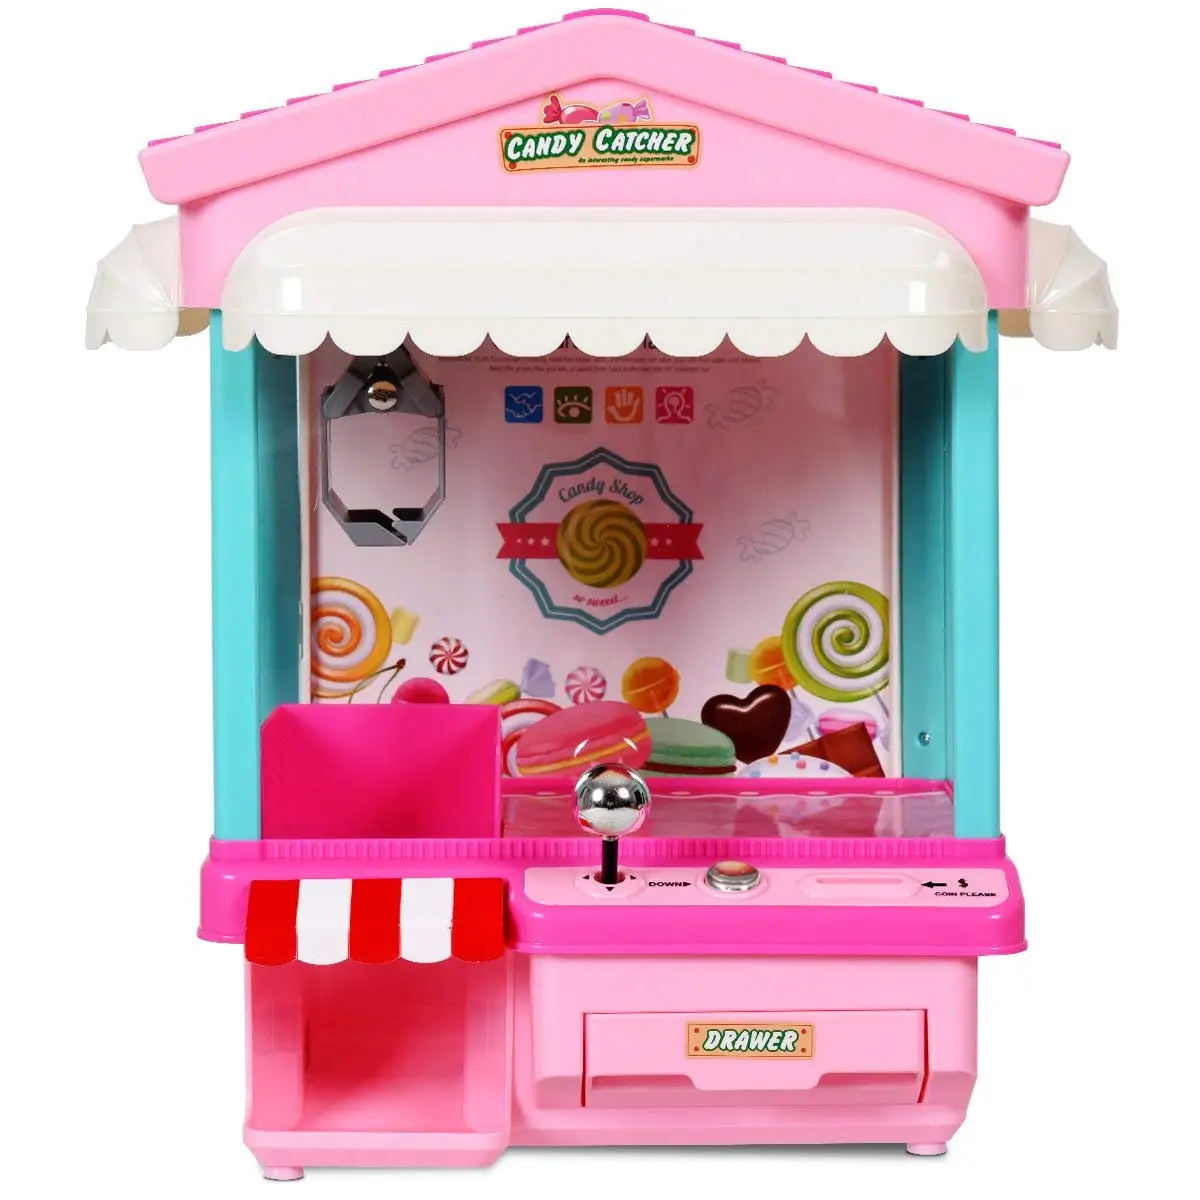 Автомат с игрушками moj moj. Arcade Grabber Toy. Candy Catcher. Arcade Grabber.